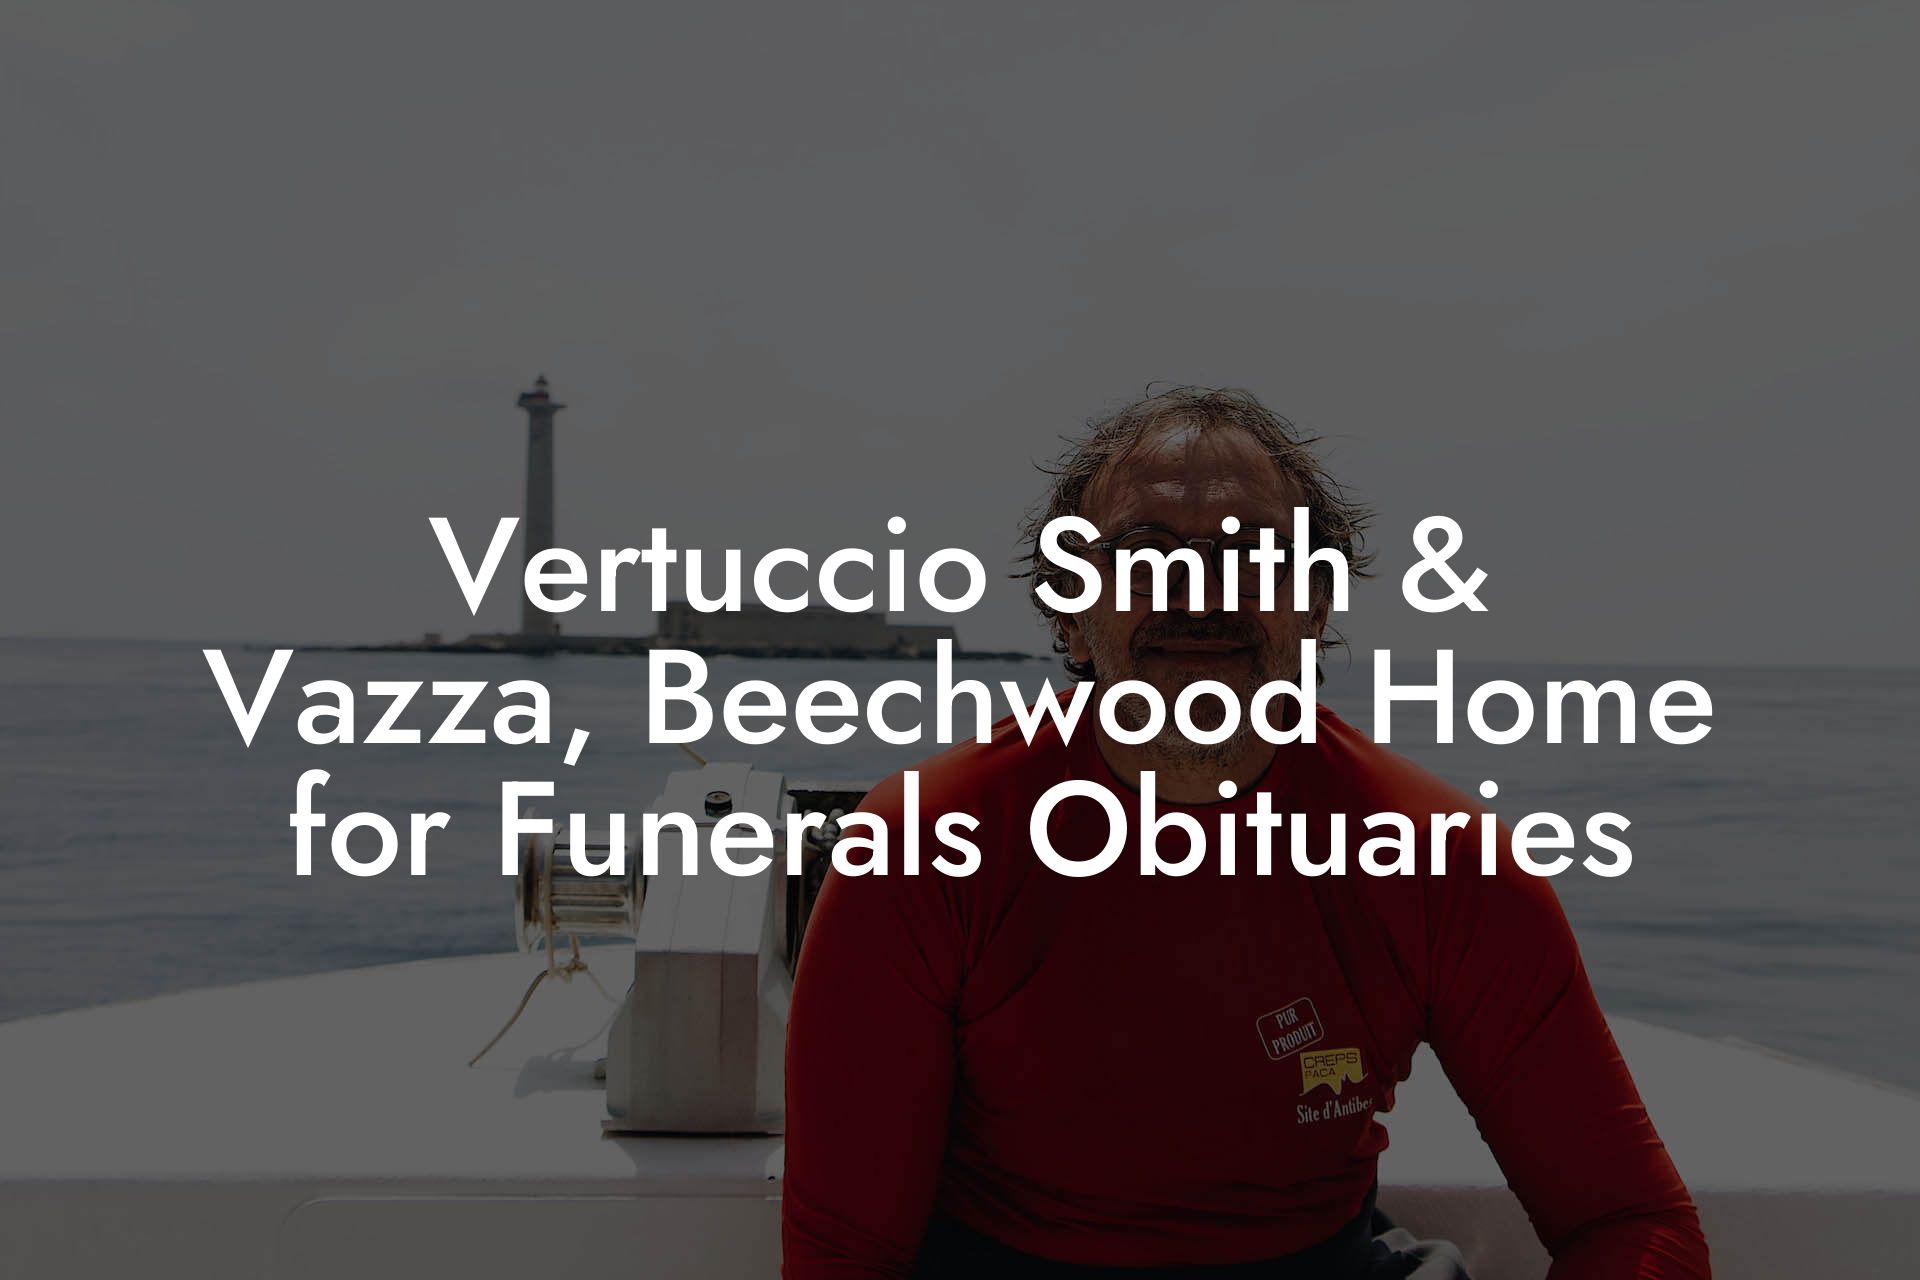 Vertuccio Smith & Vazza, Beechwood Home for Funerals Obituaries